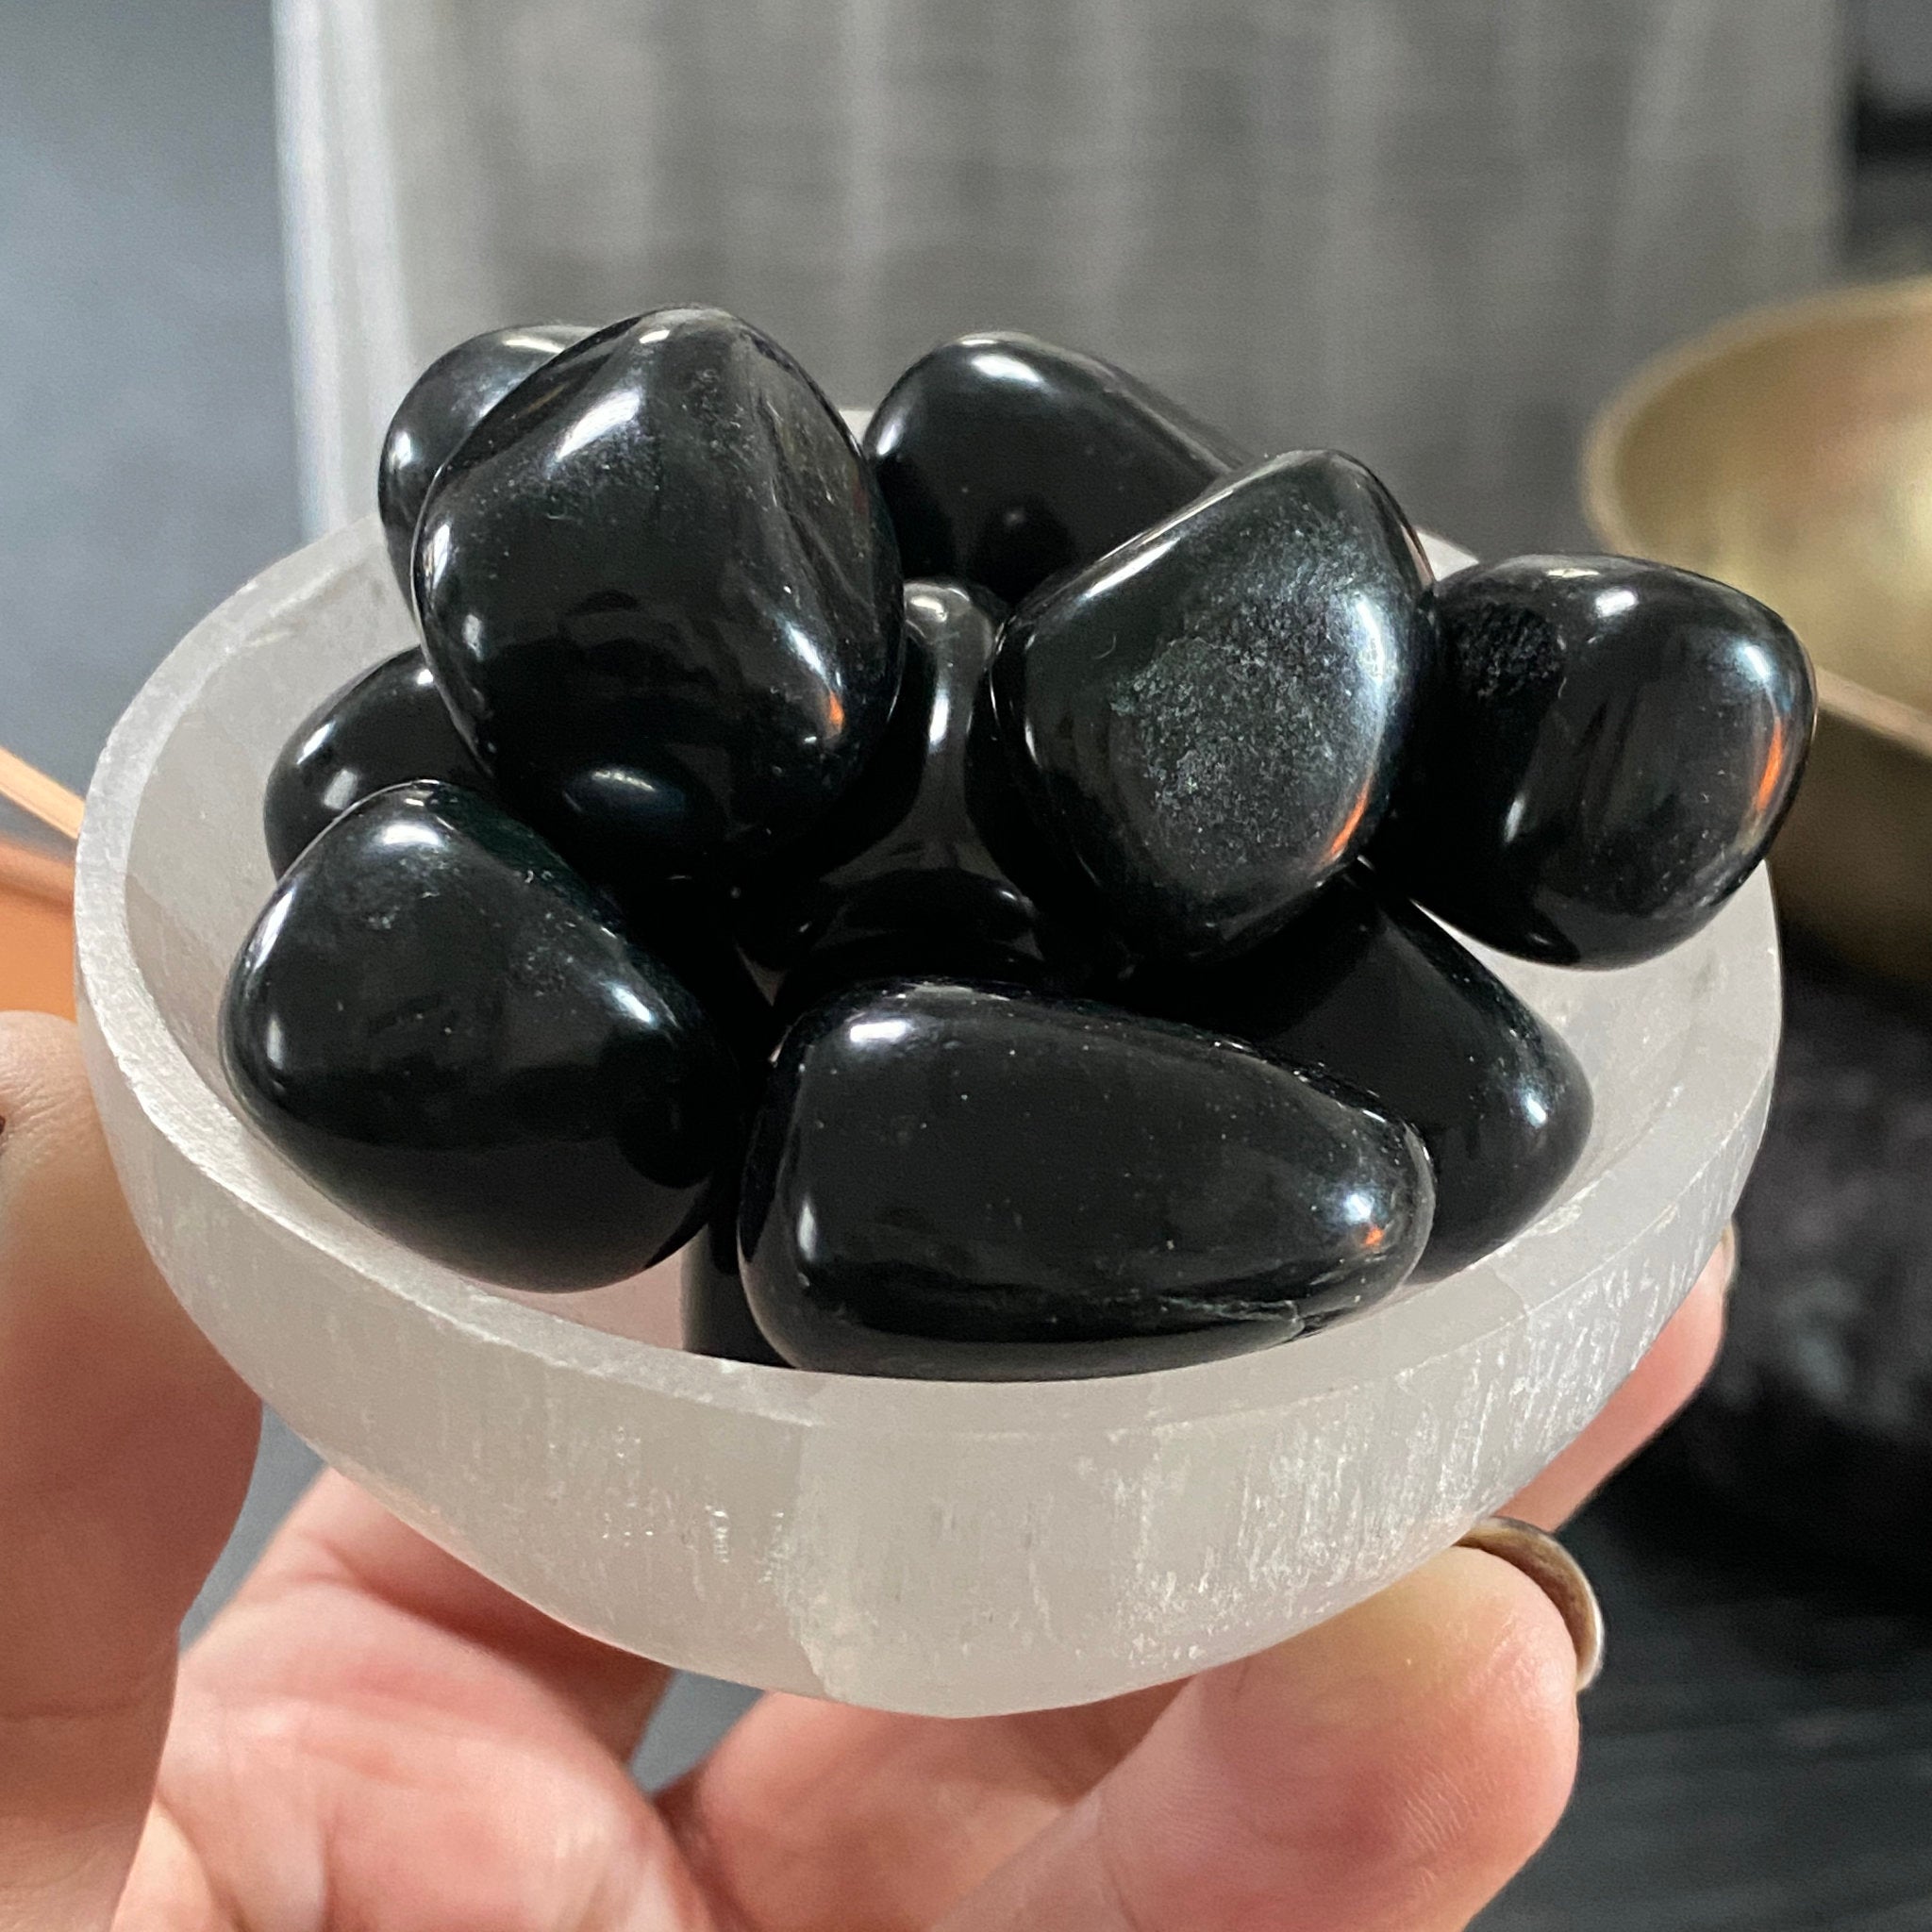 Rare Black Jade tumbled stones from Greenland